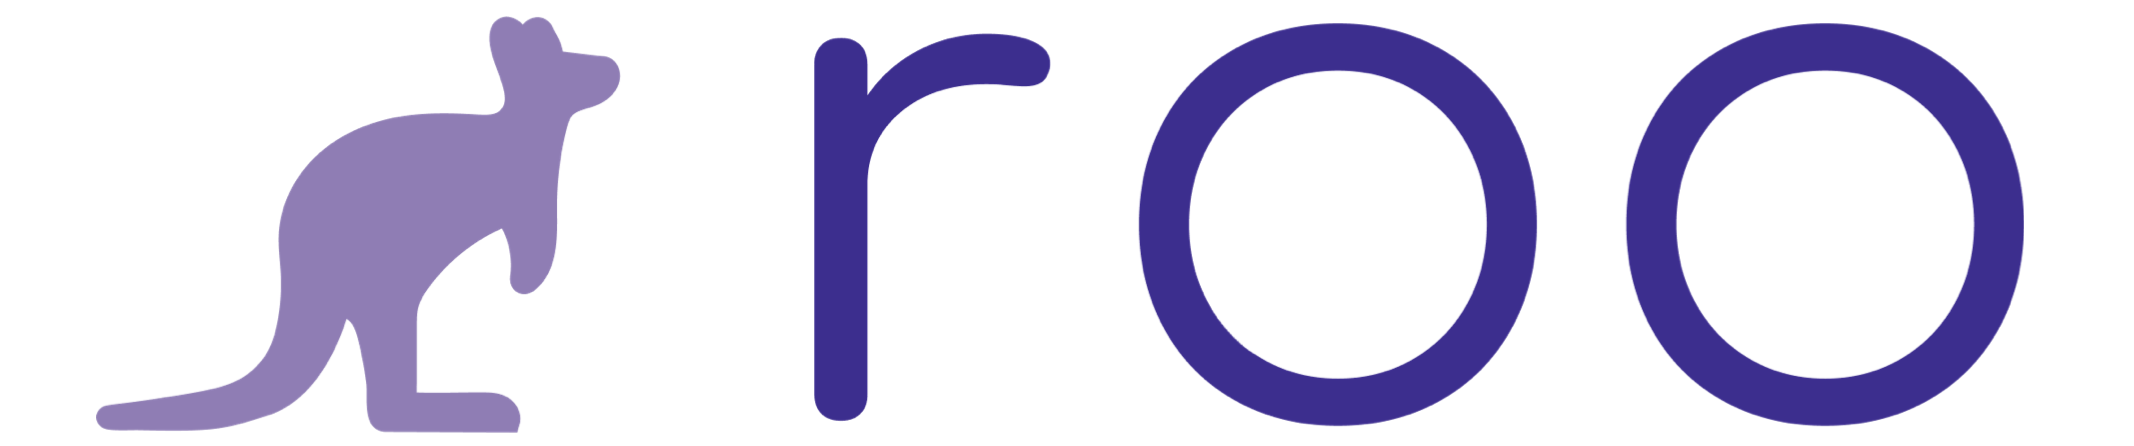 Roo Logo